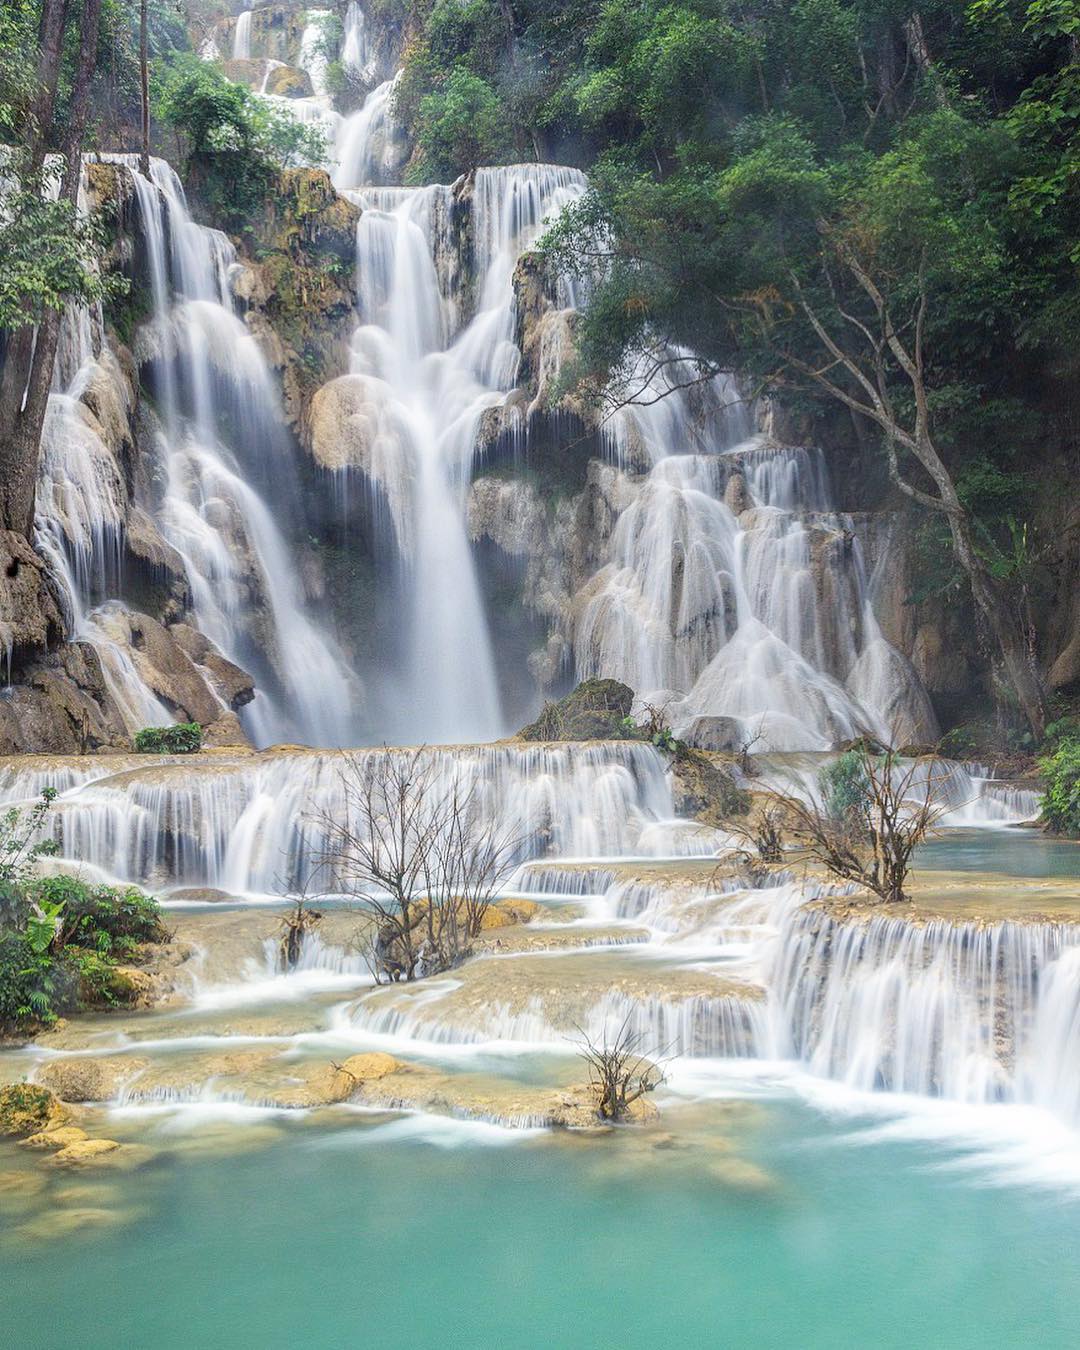 Kuang Si waterfall 💦 #luangprabang #laos #kuangsi #kuangsifalls #water #waterfall #waterfalls #longexposure #nature #beautiful #beautifulplace #incredible_shot #travel #travelblog #wonderful_places #world_illife #travelgram #waterfallsfordays #worldplaces